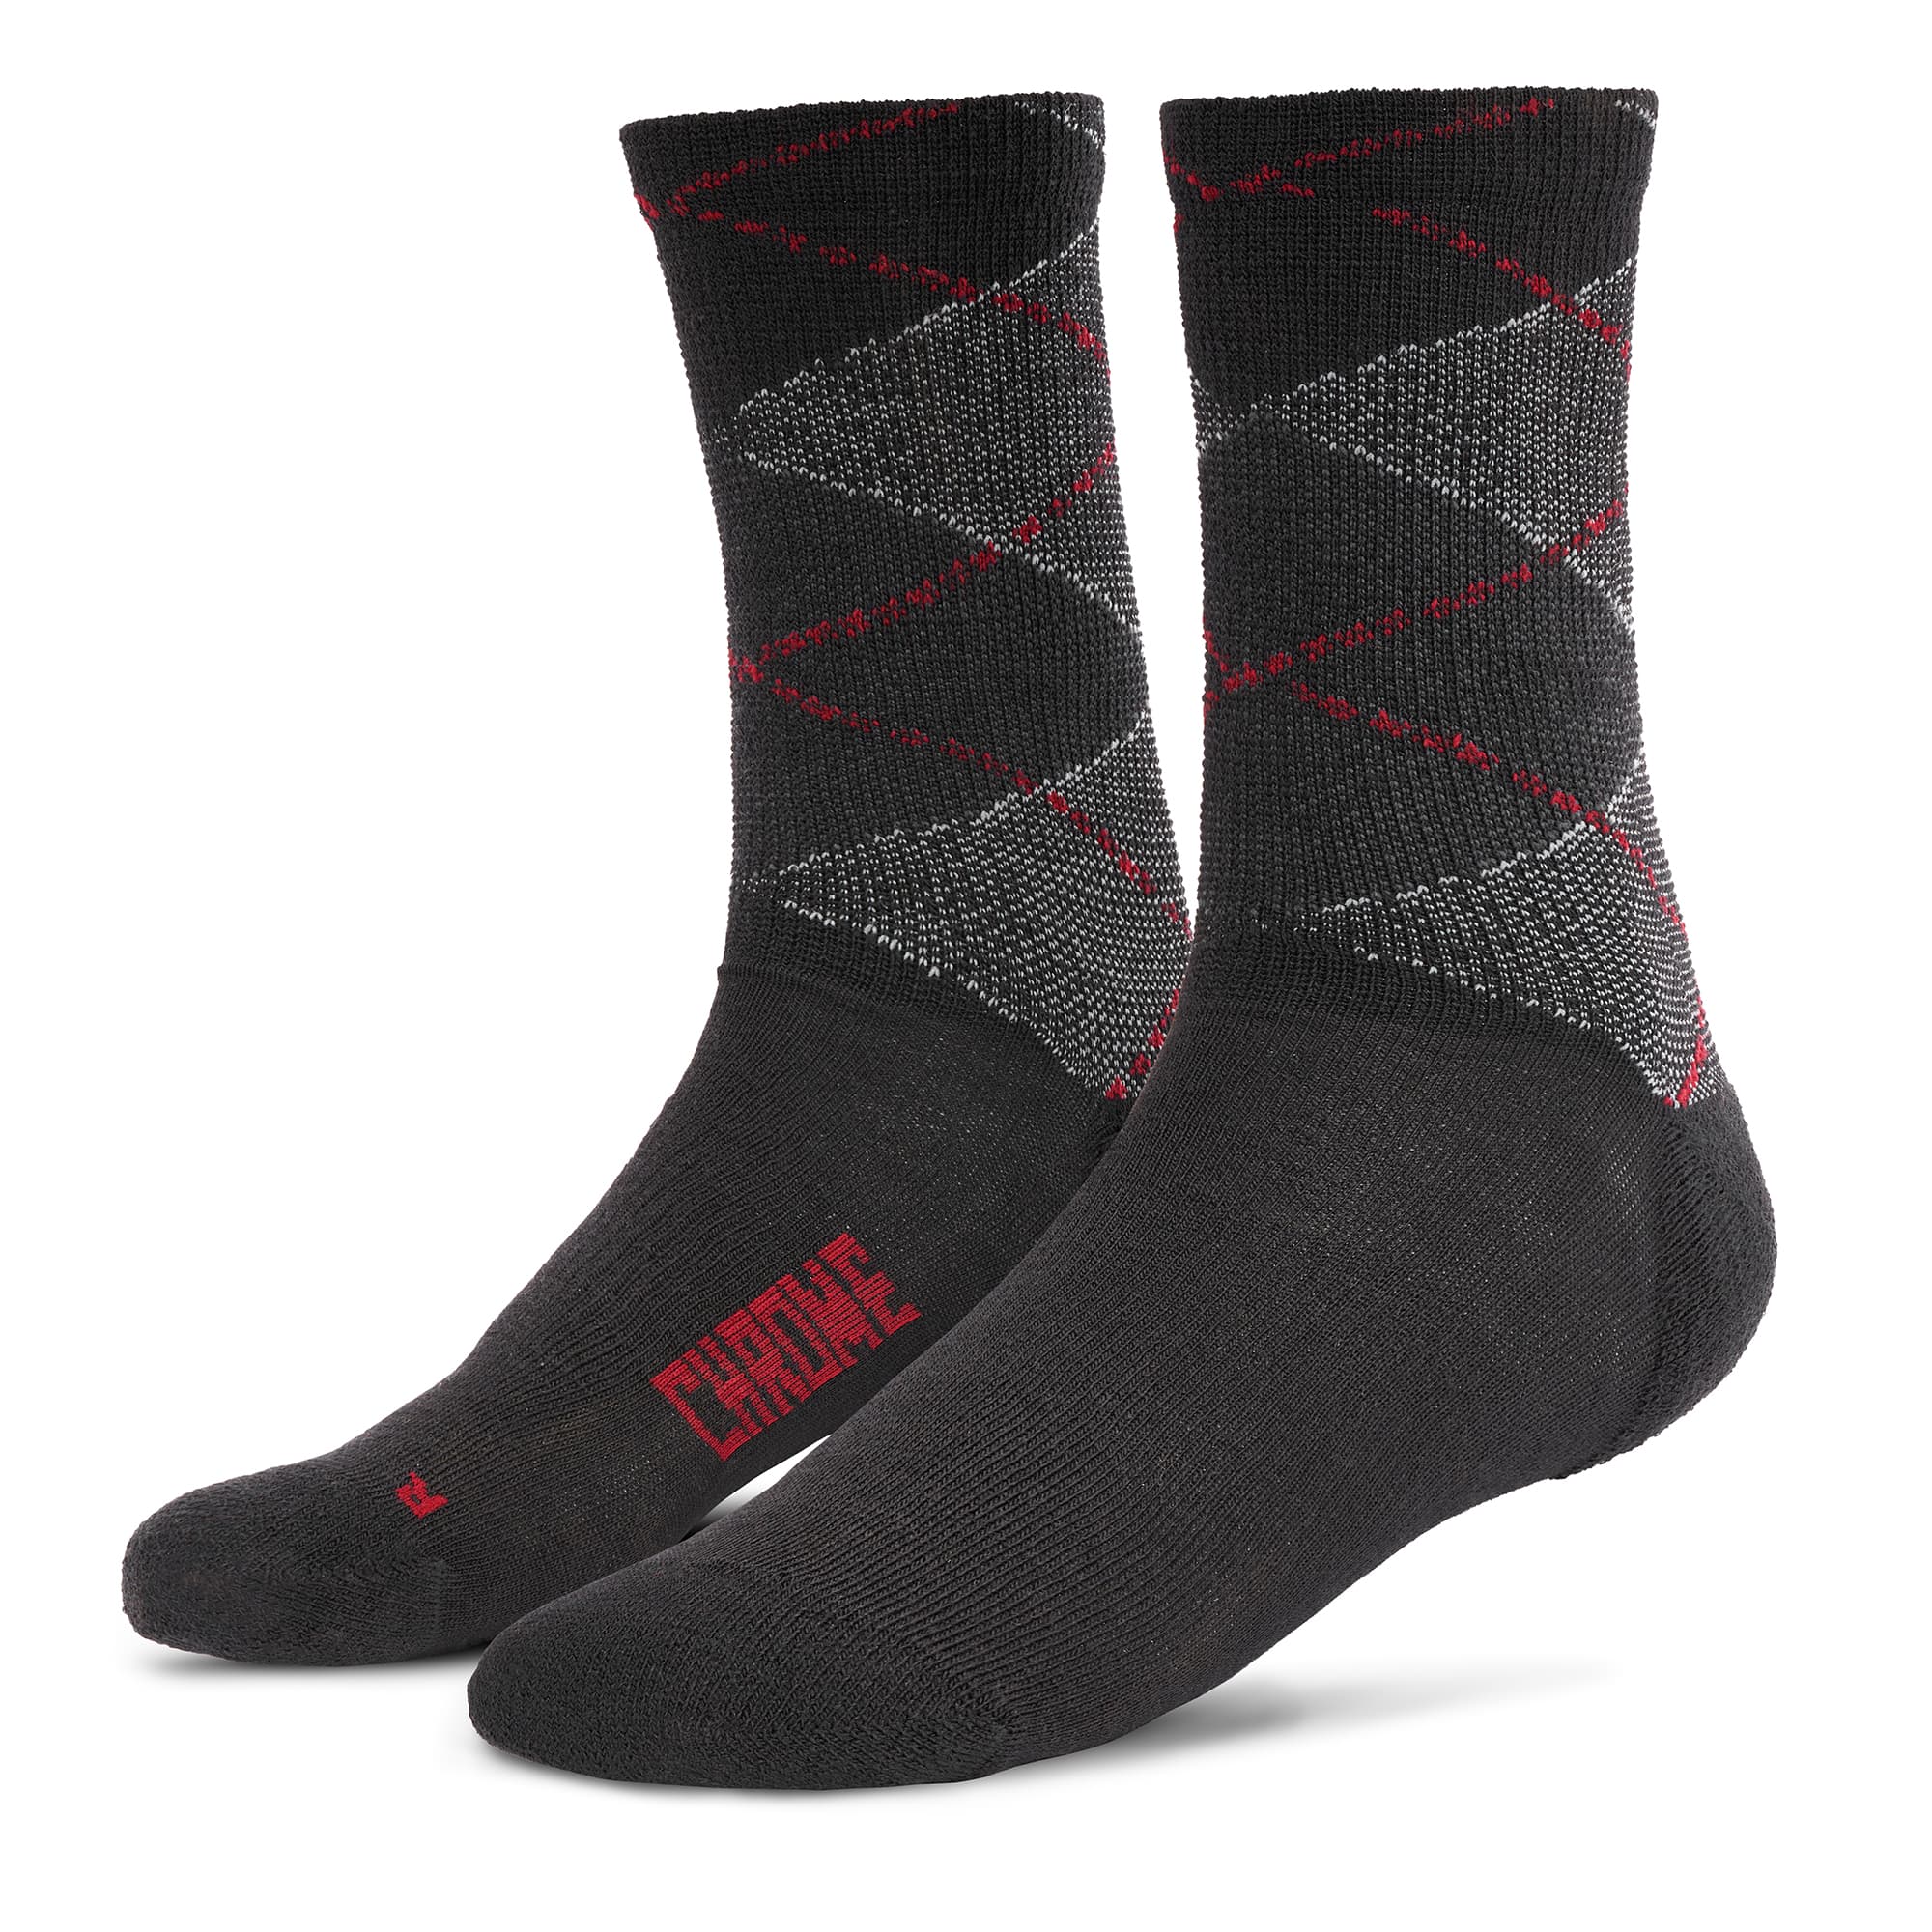 Merino Wool Crew Socks in black argyle #color_black argyle